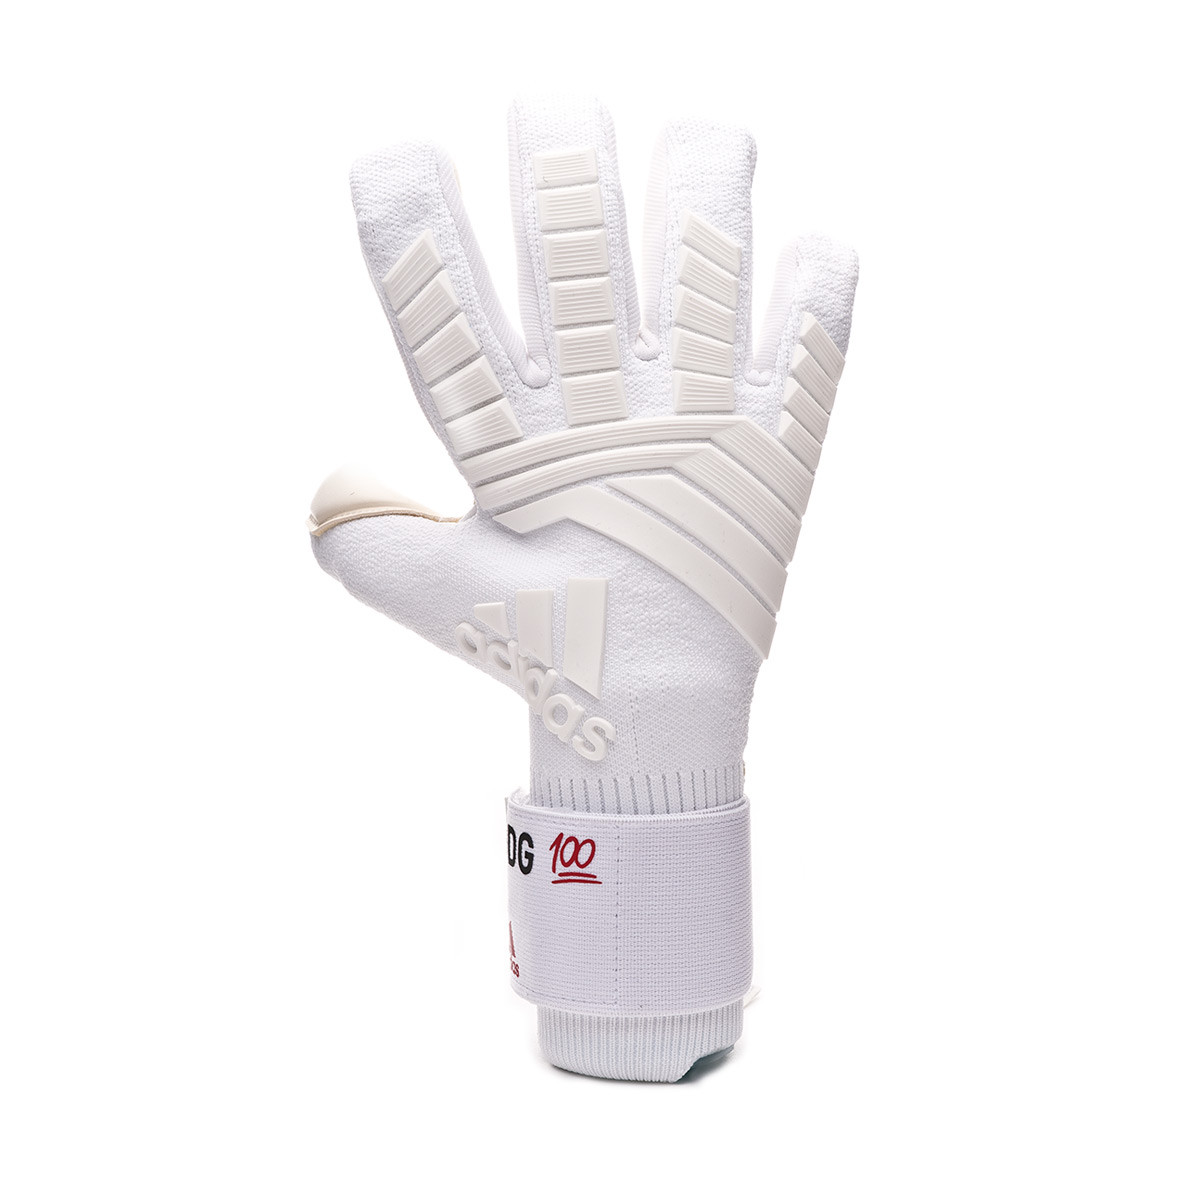 mens adidas goalkeeper gloves